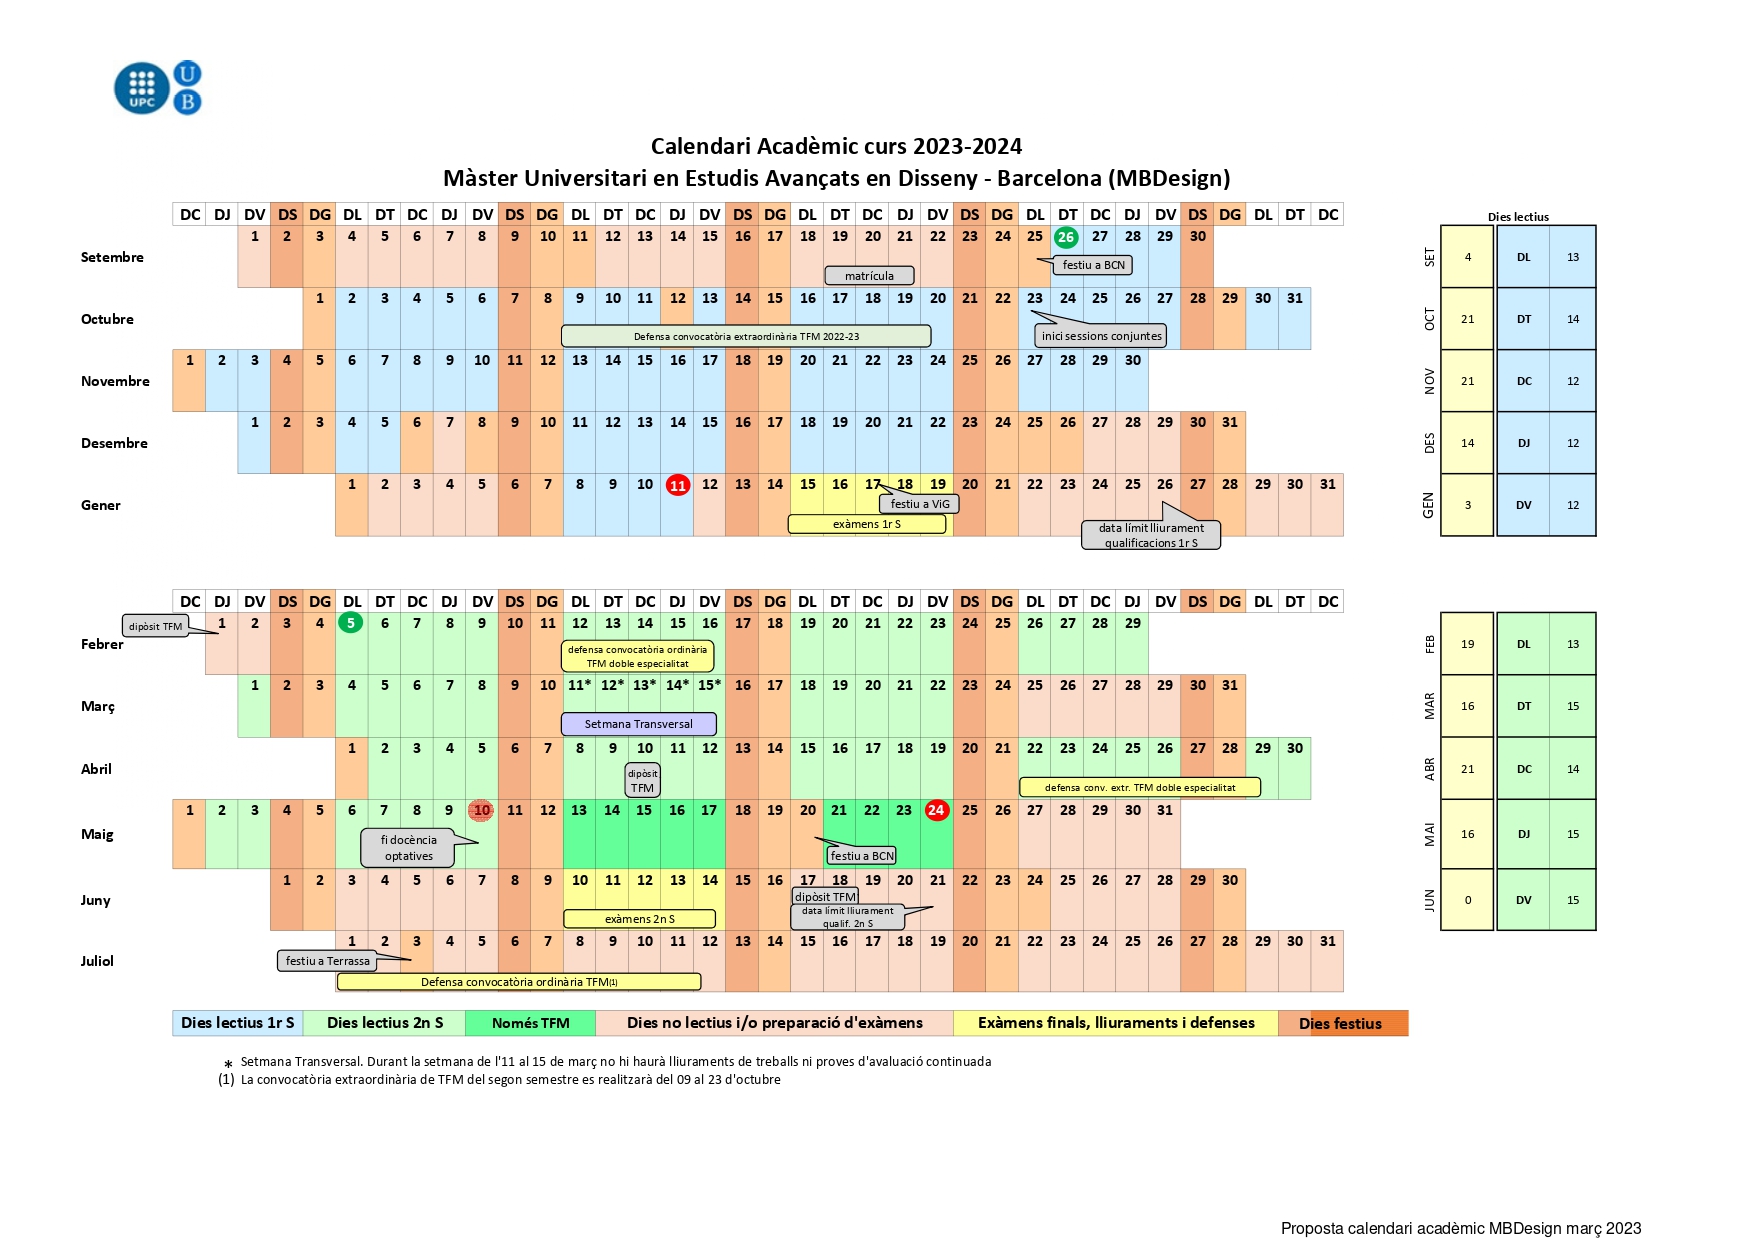 calendari academic mbdesign 2022 23 imatge